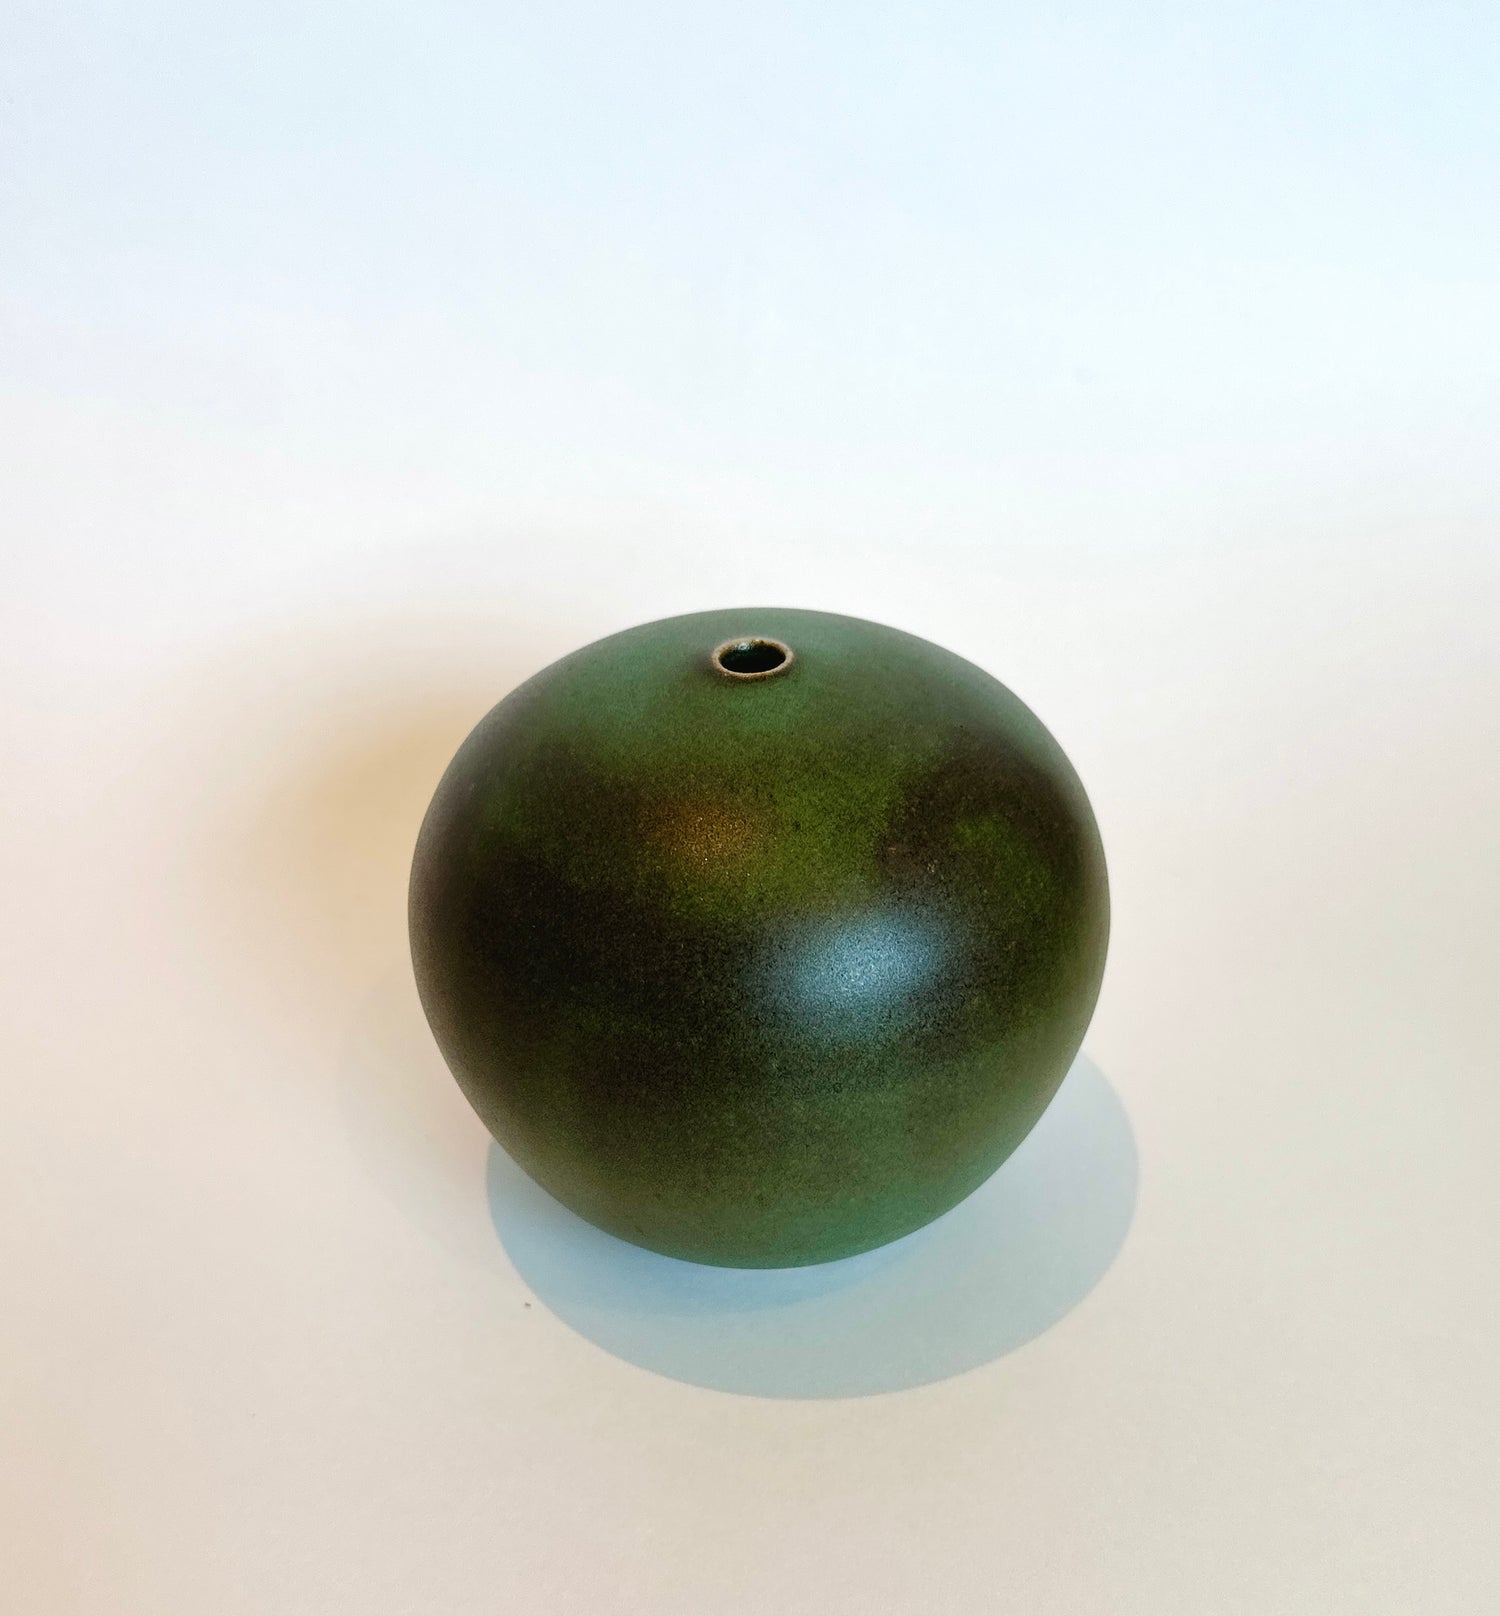 Green orb no. 41